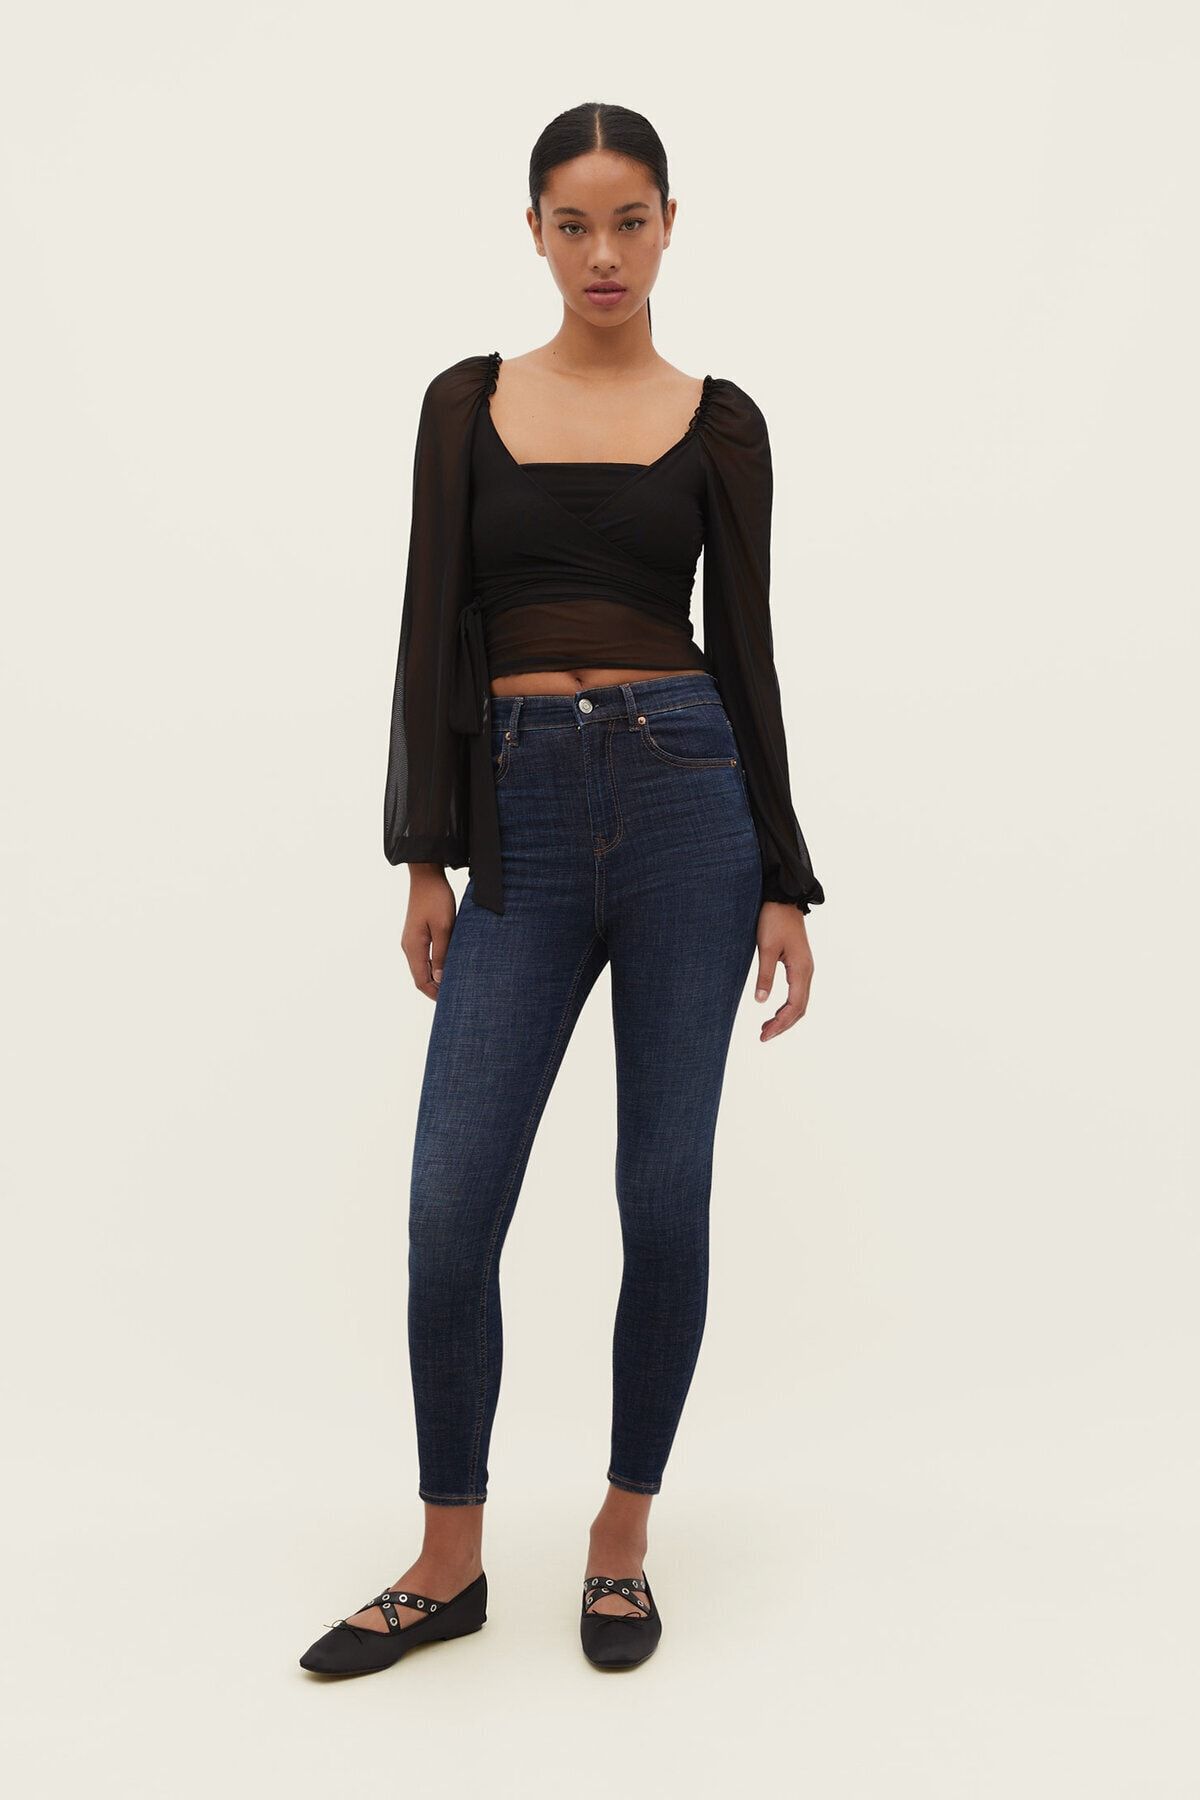 1450 Jeans skinny super high waist - Moda de mulher